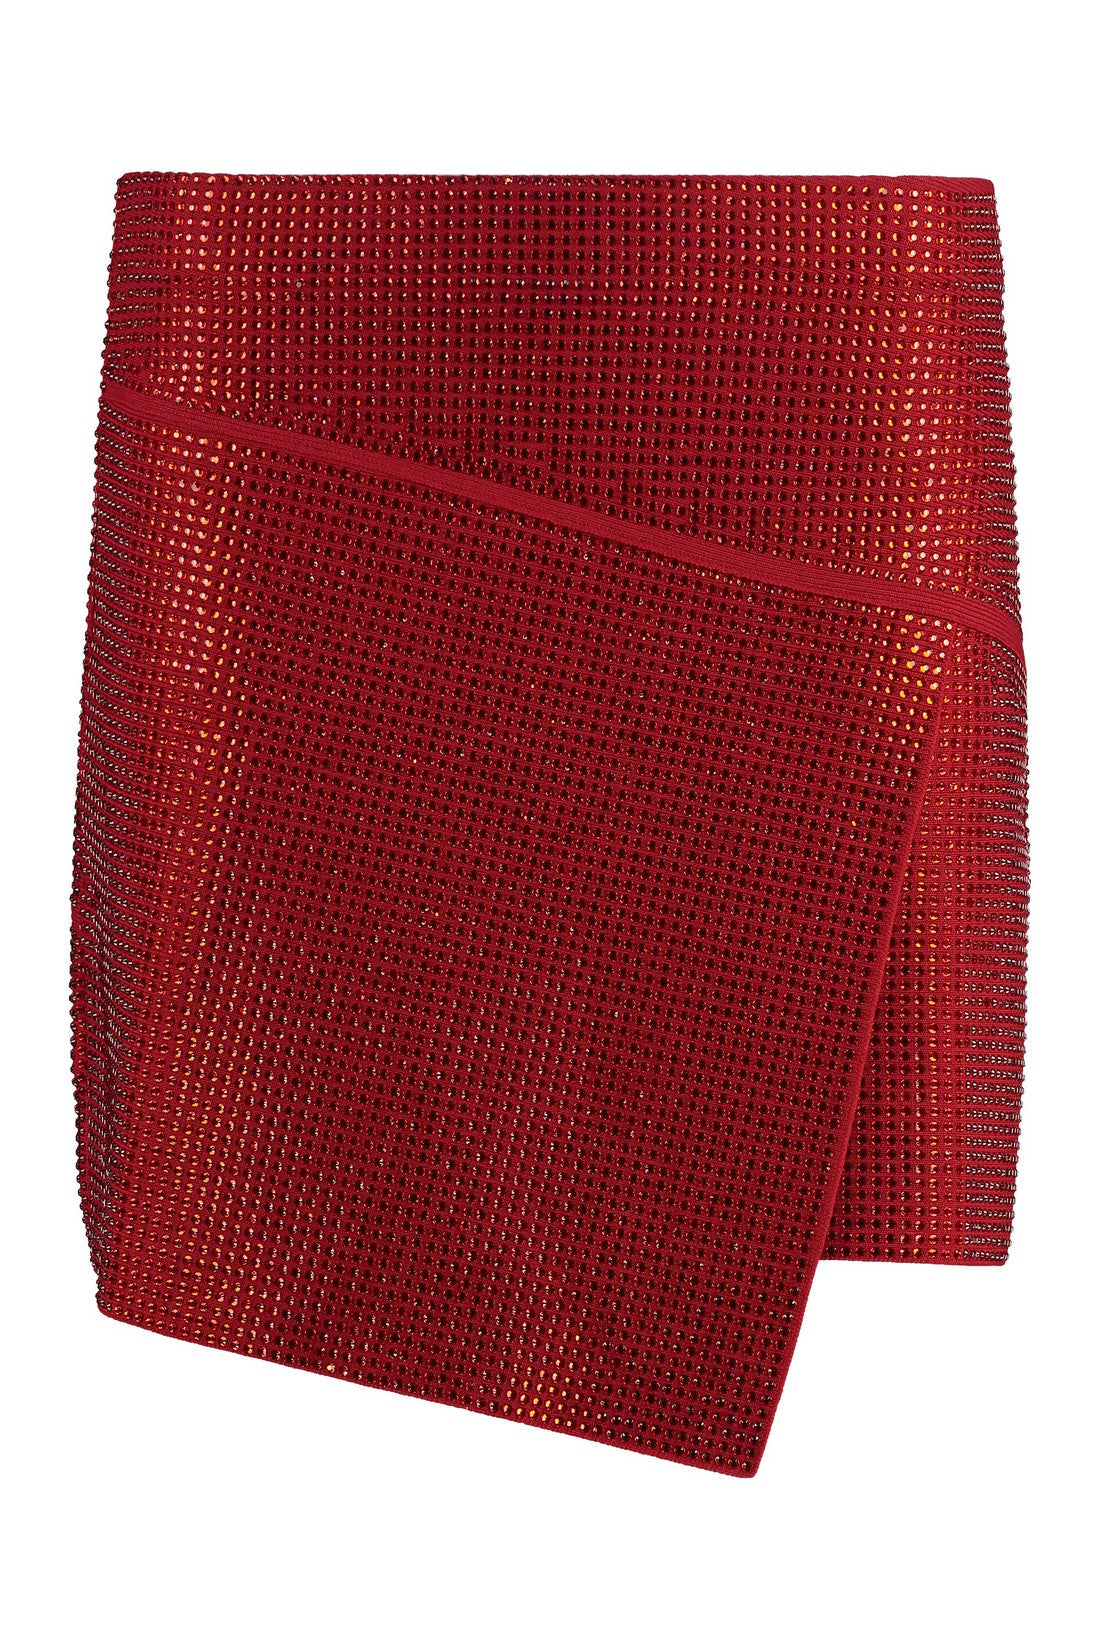 ANDREADAMO-OUTLET-SALE-Asymmetric miniskirt-ARCHIVIST